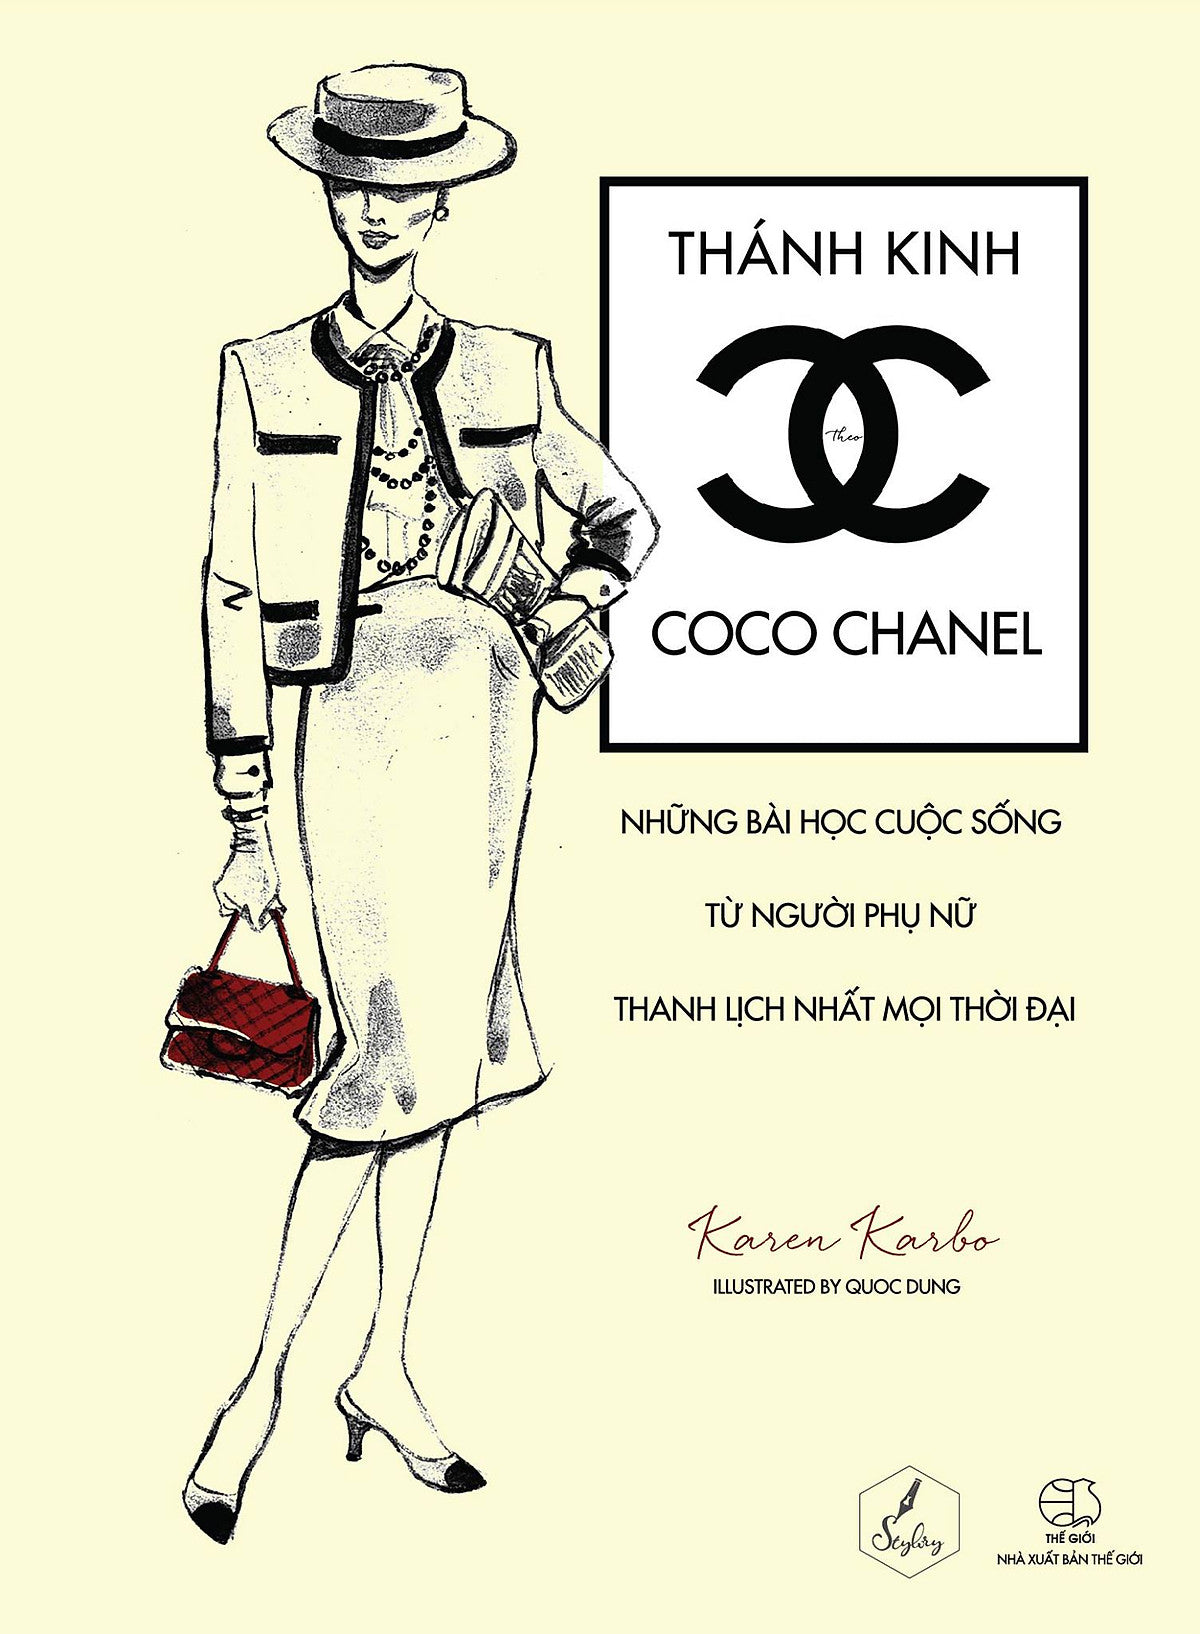 Thánh Kinh Coco Chanel